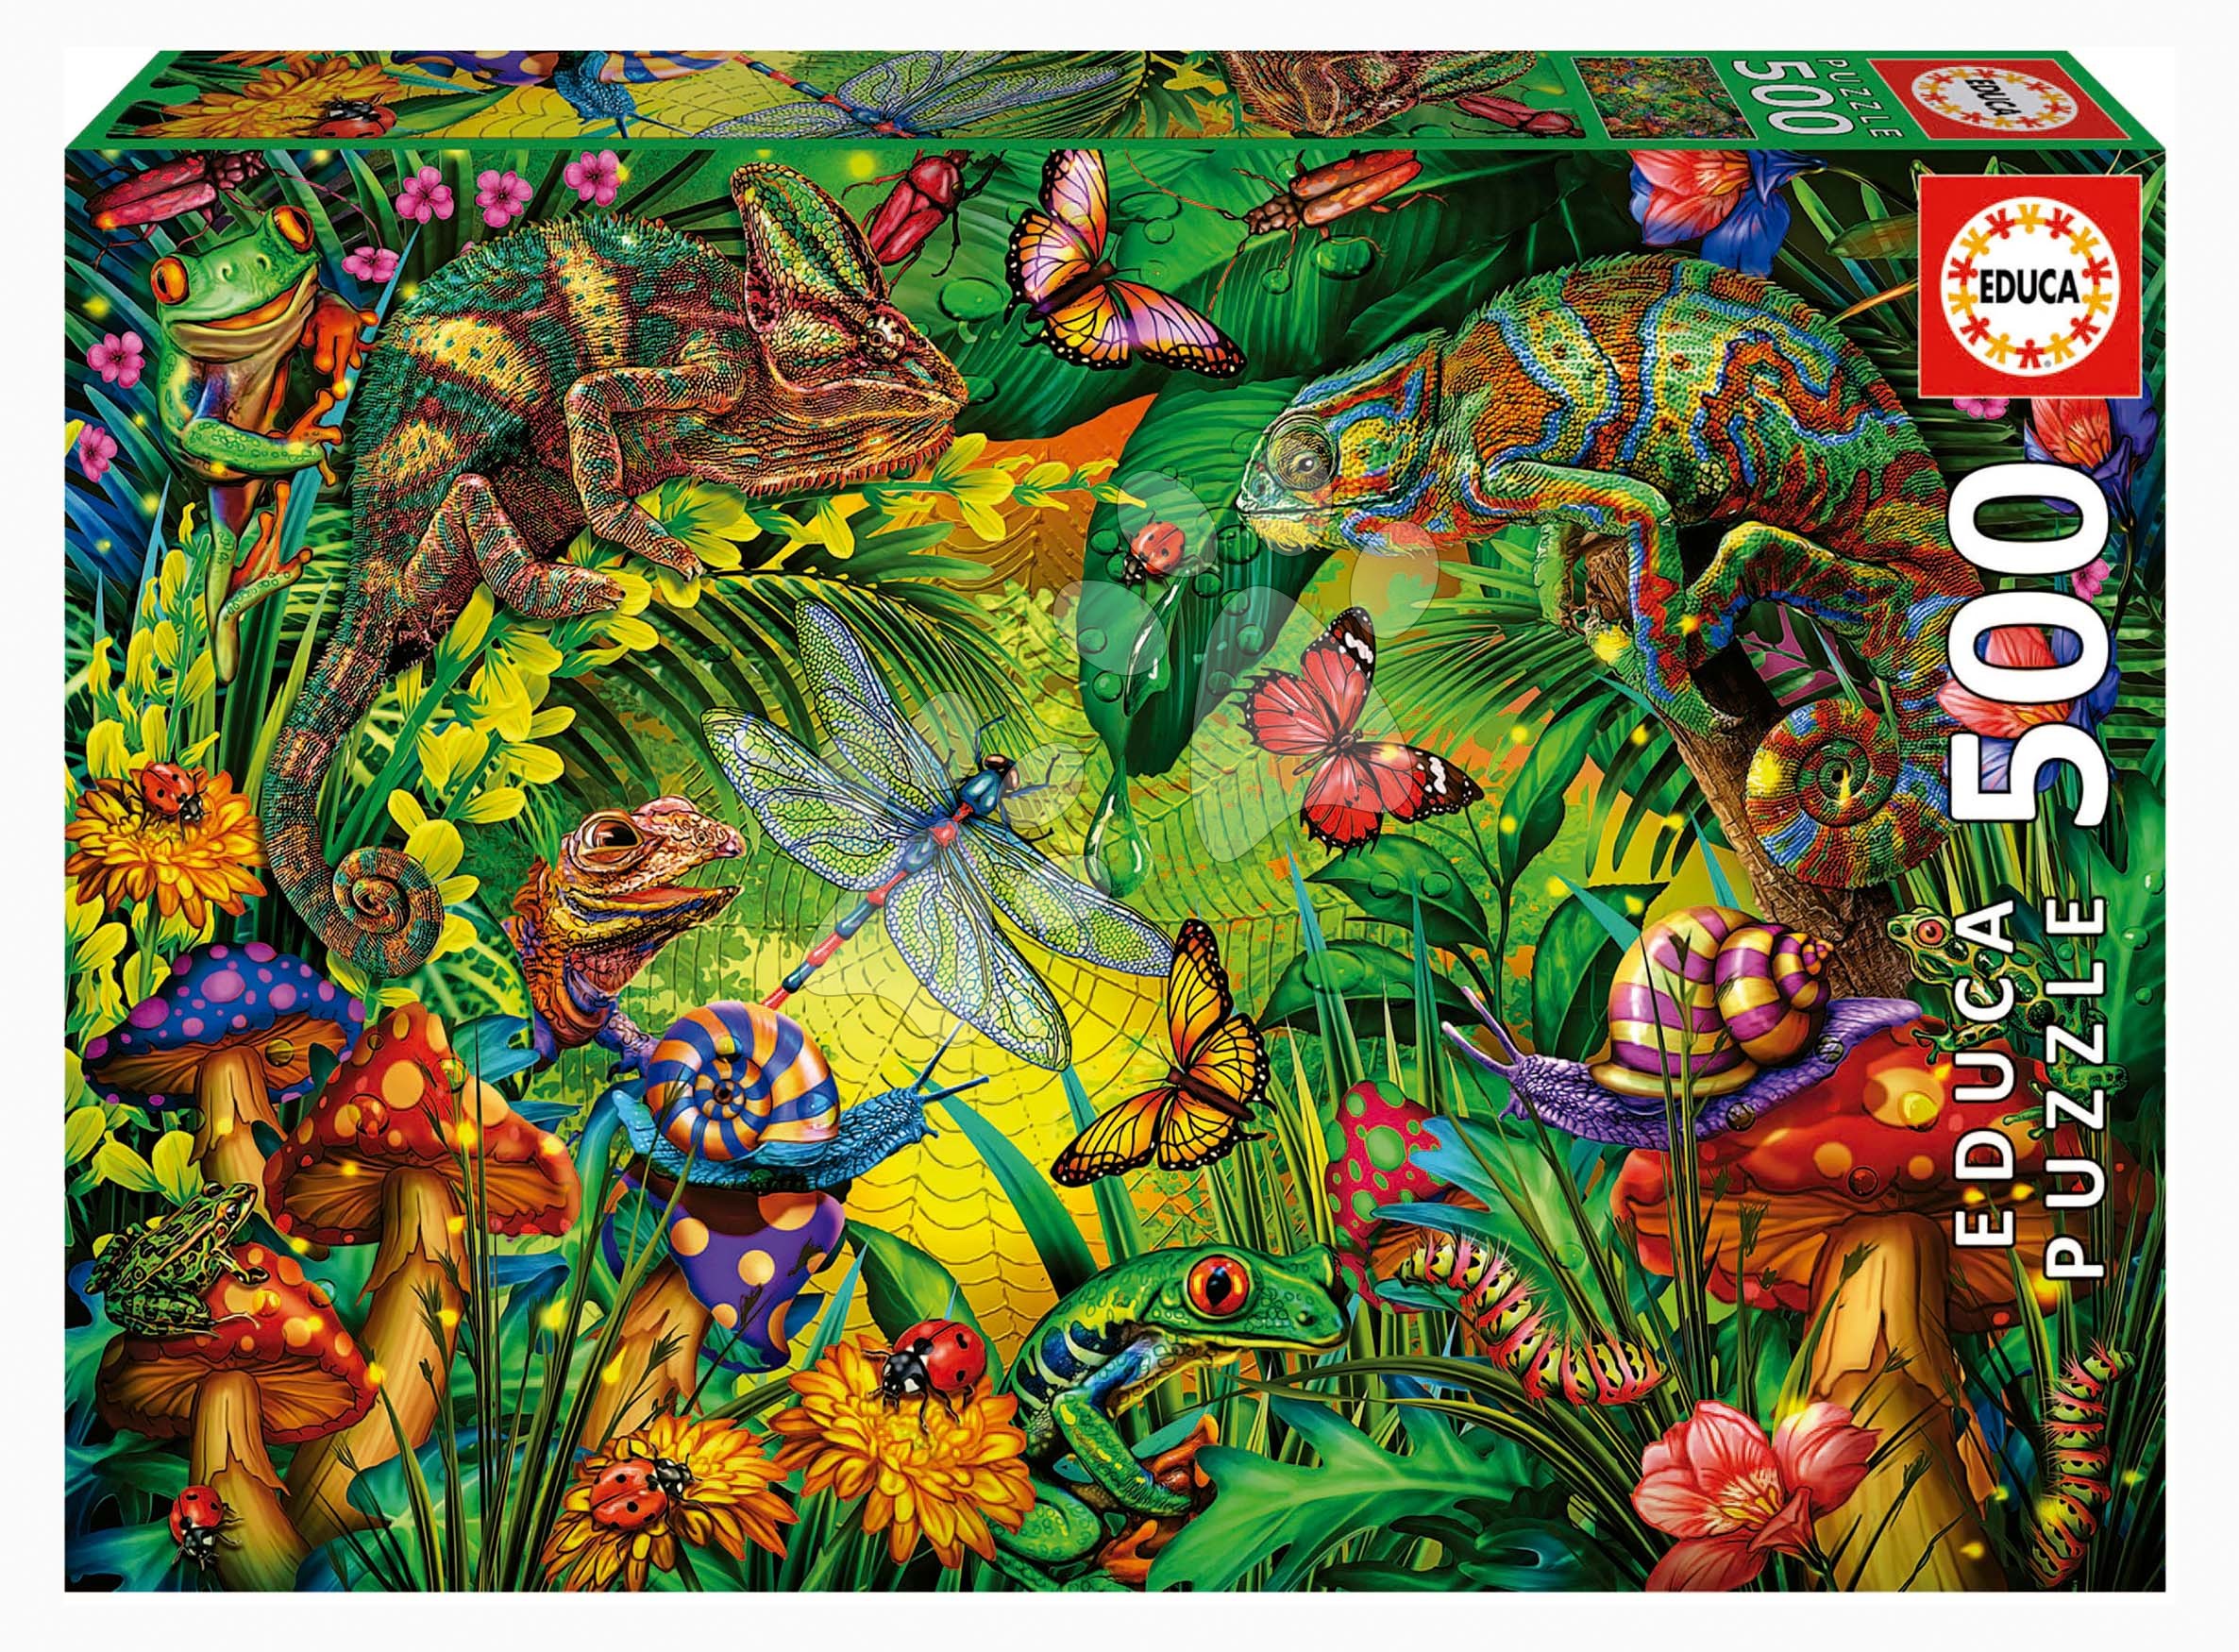 Puzzle Colourful Forest Educa 500 darabos és Fix ragasztó